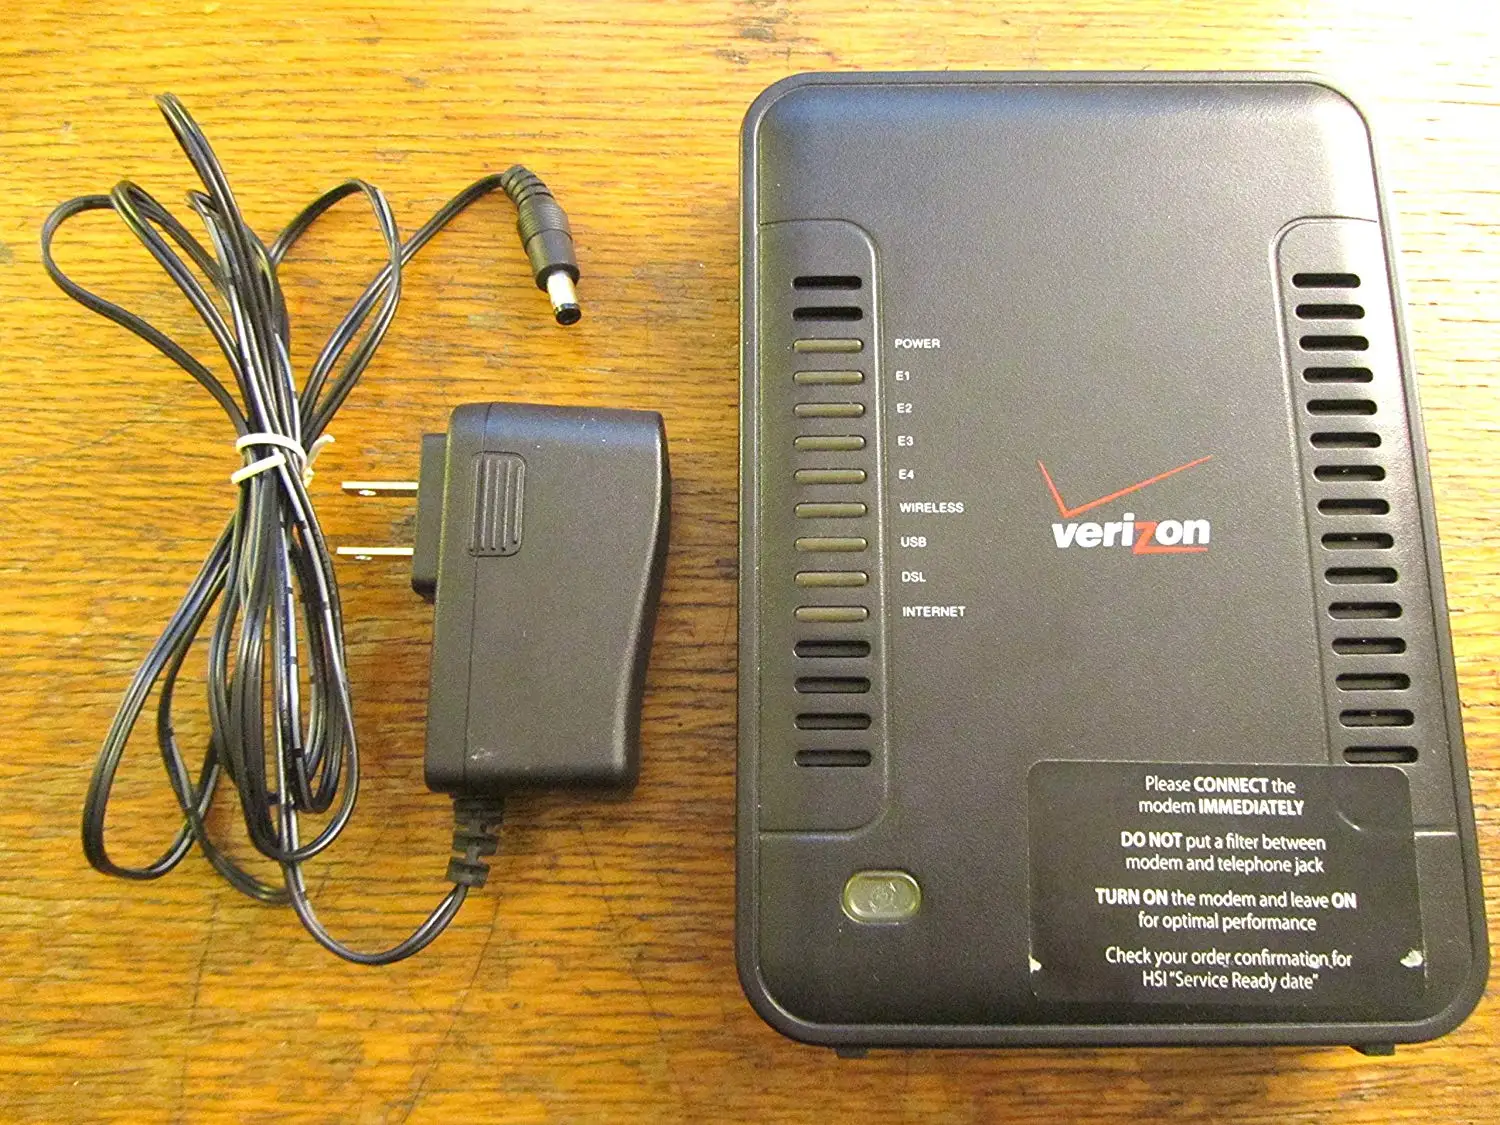 netgear n150 wireless usb adapter used with verizon jet pack